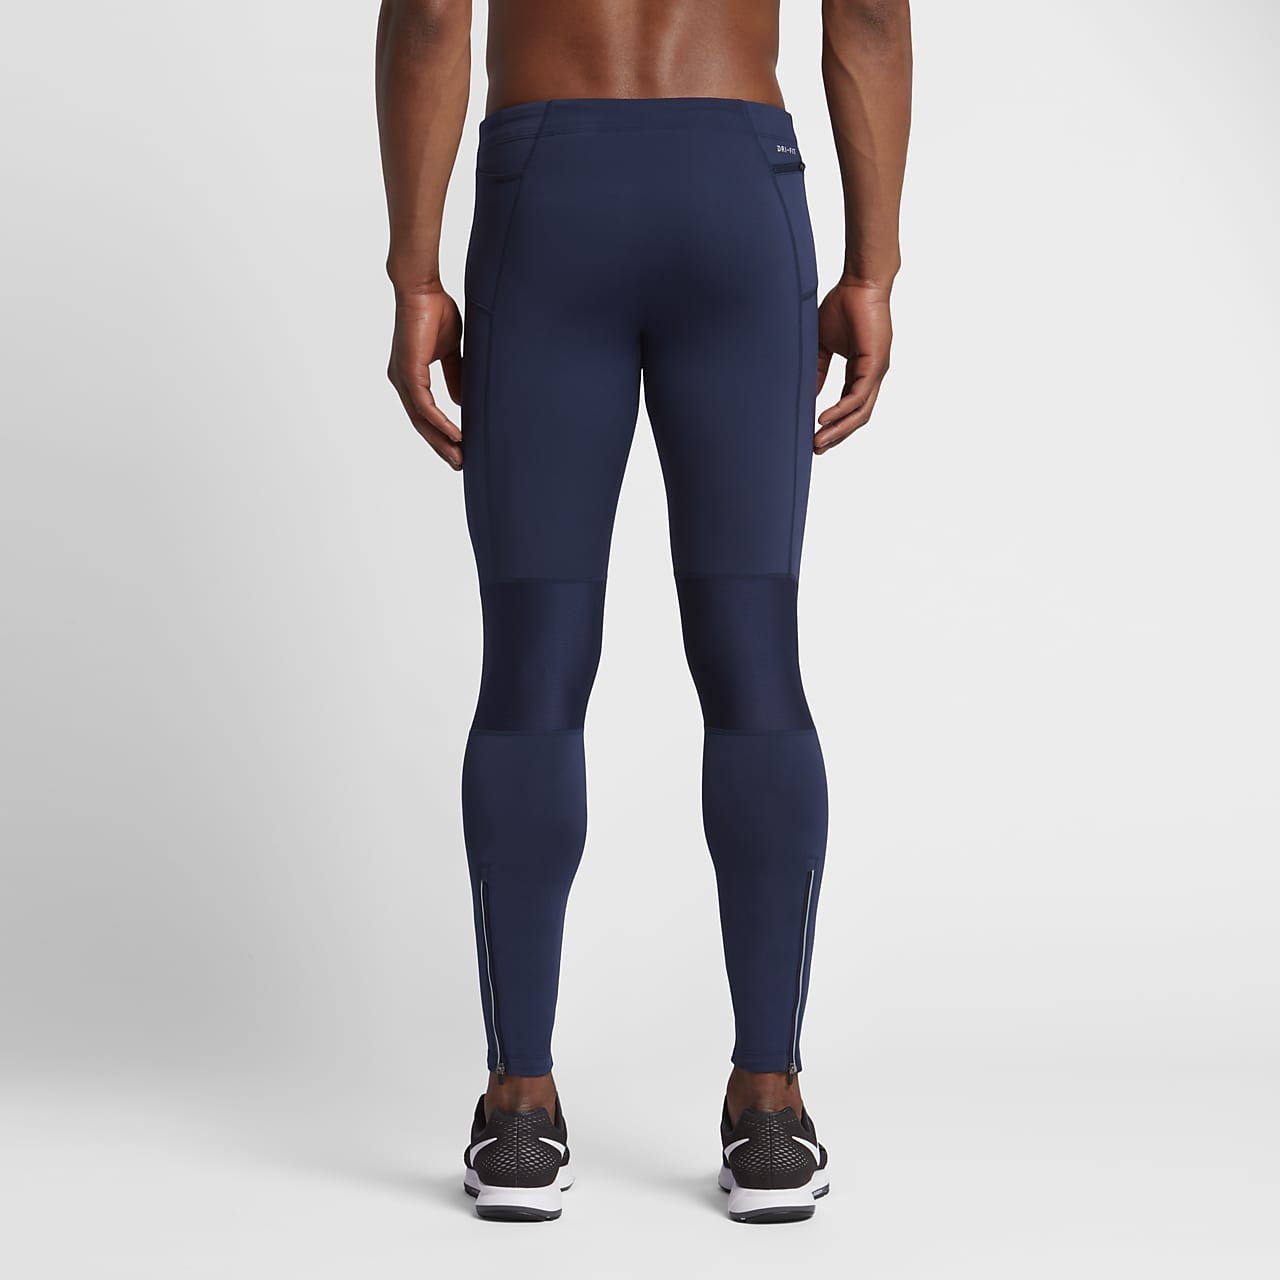 sammensatte Forfatning kig ind Nike Tech Men's Running Tights. Nike ID